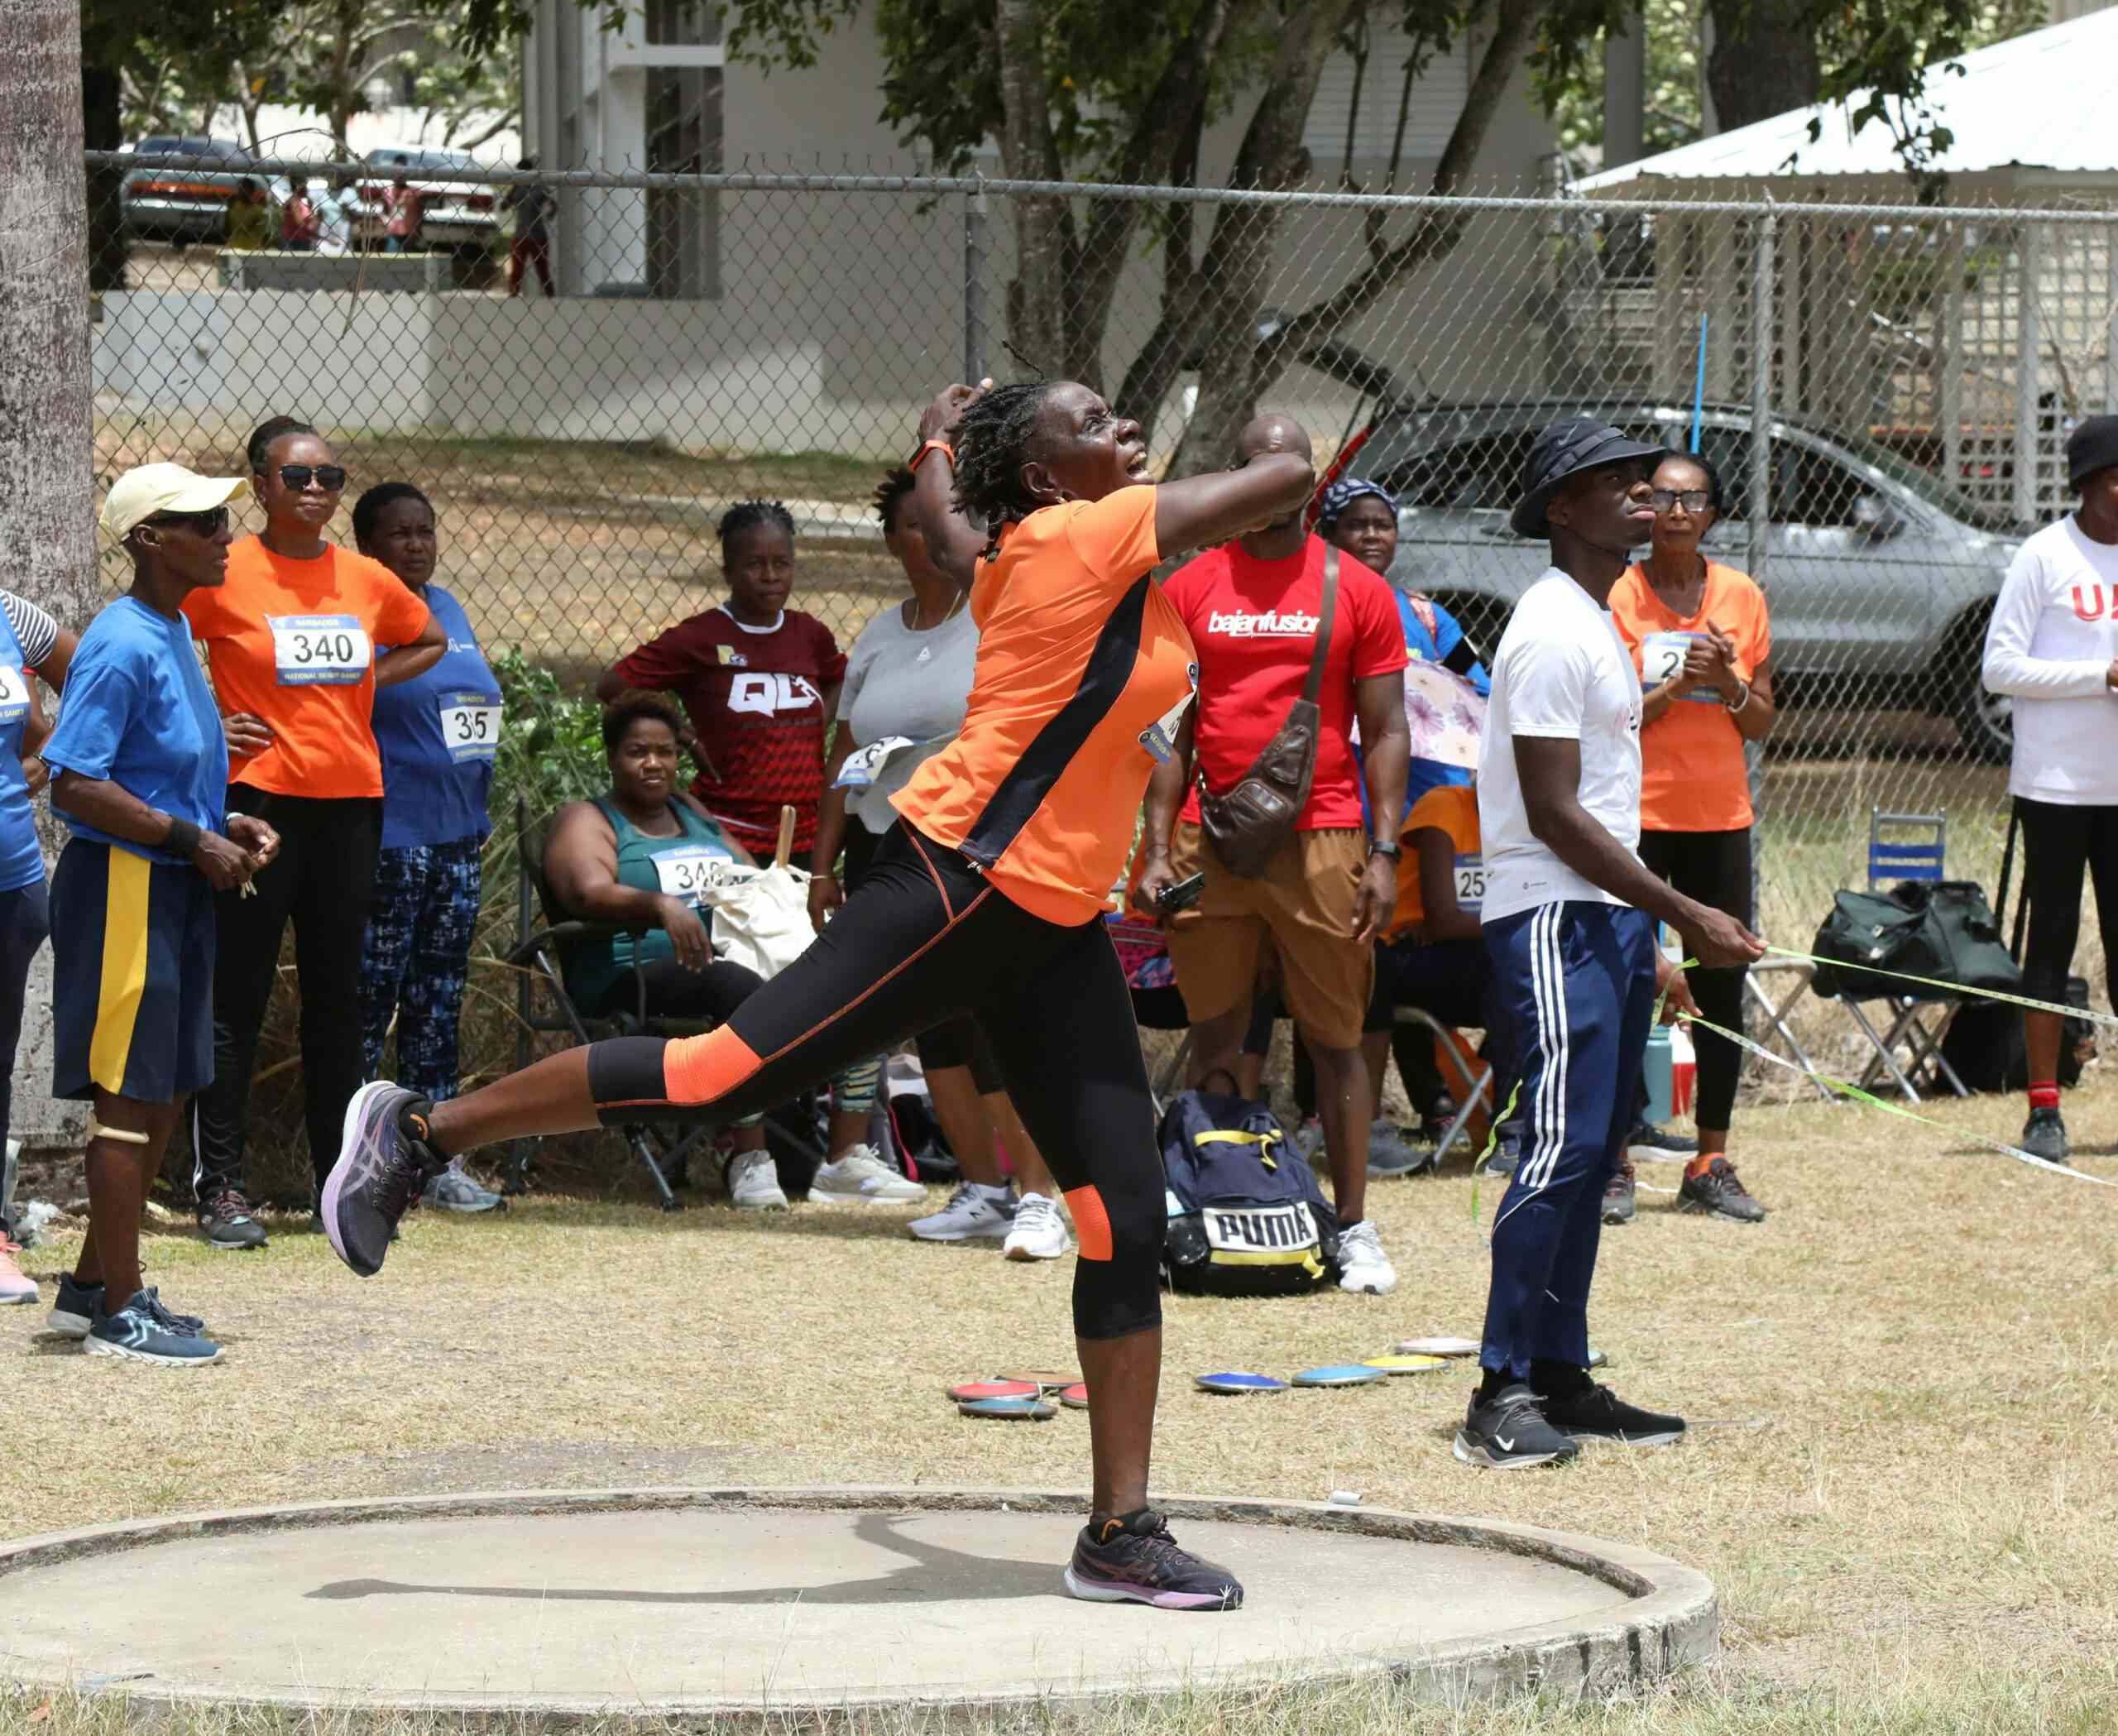 Barbados National Senior Games Showcases Athletic Spirit & Dedication, Featuring Impressive Discus & Javelin Throws Across Various Age Groups